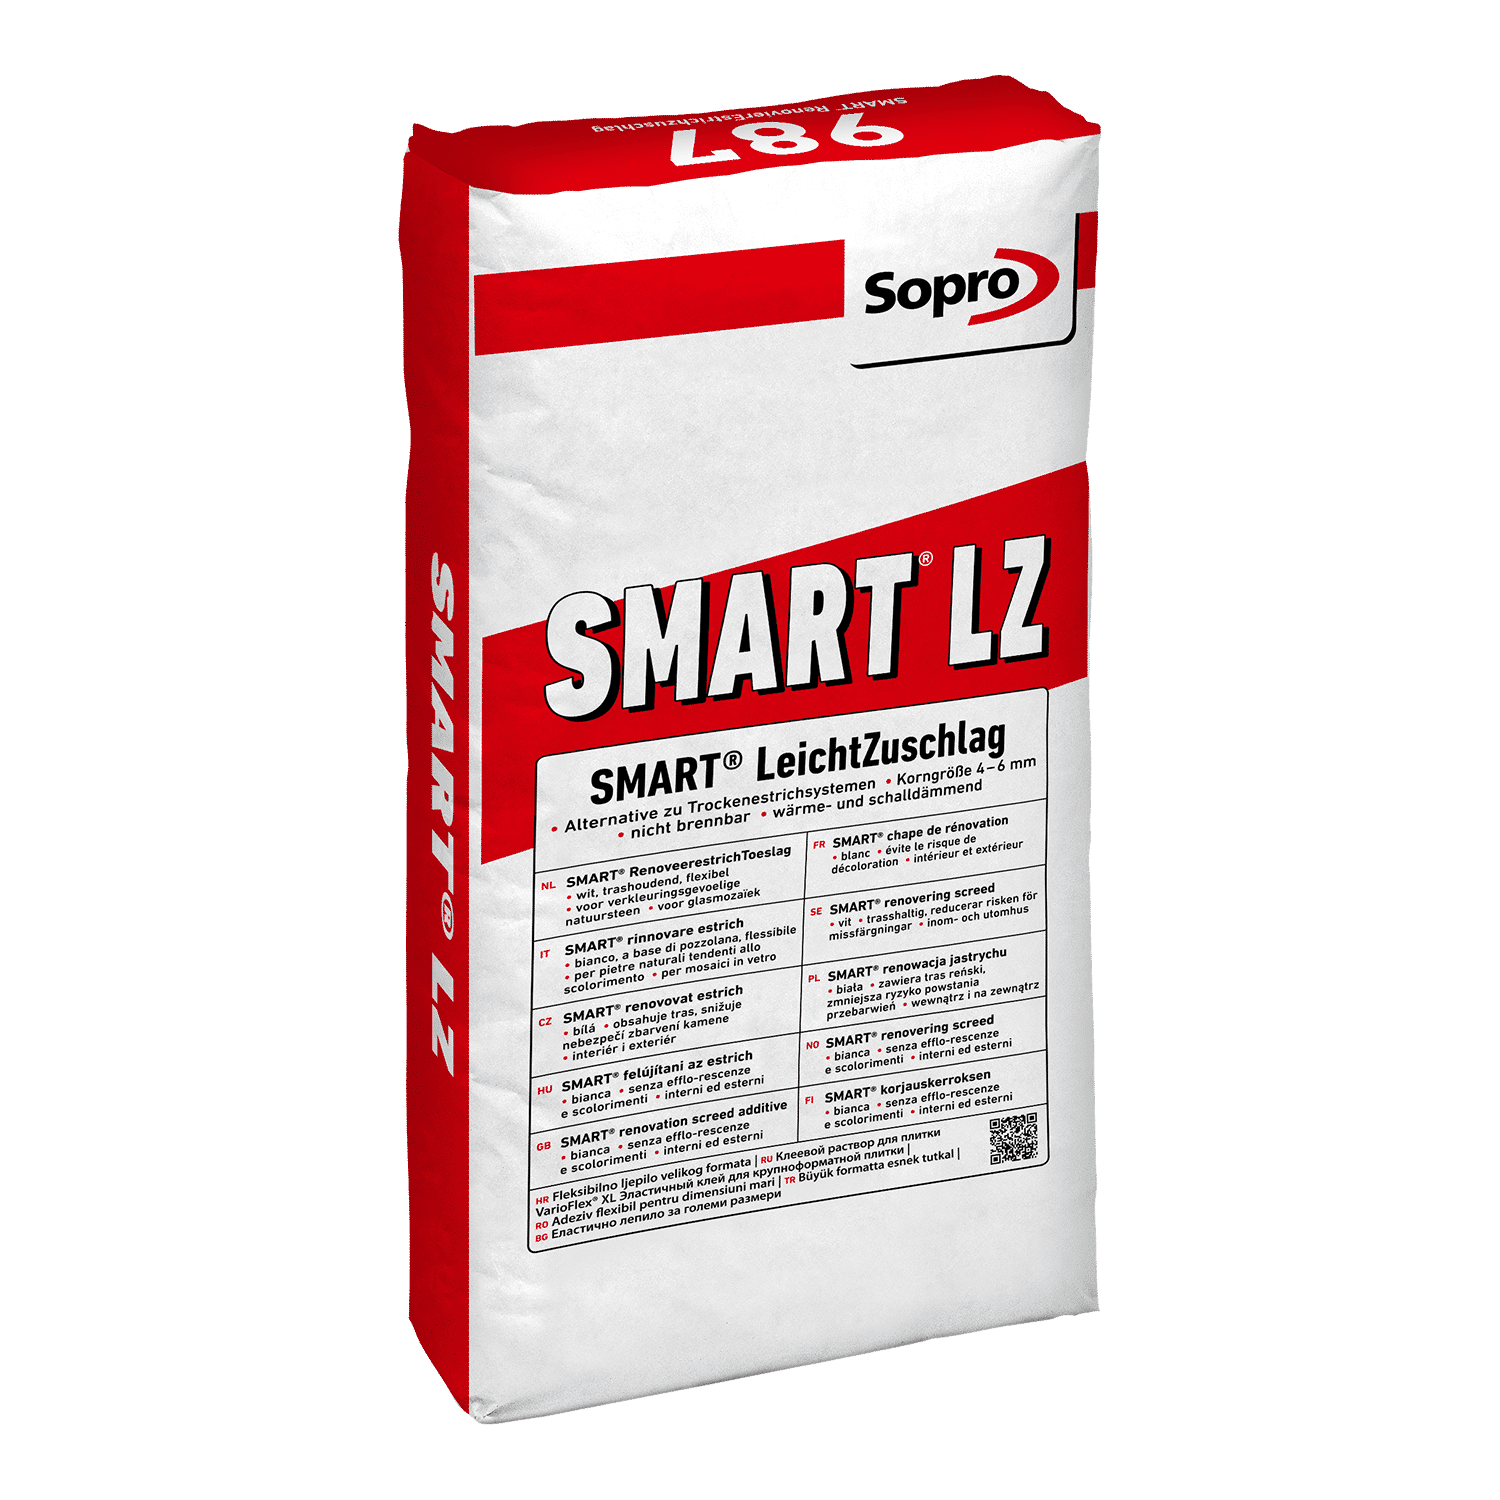 Sopro LZ 987 - Lightweight Screed Aggregate | SMART® FLOORING SYSTEM